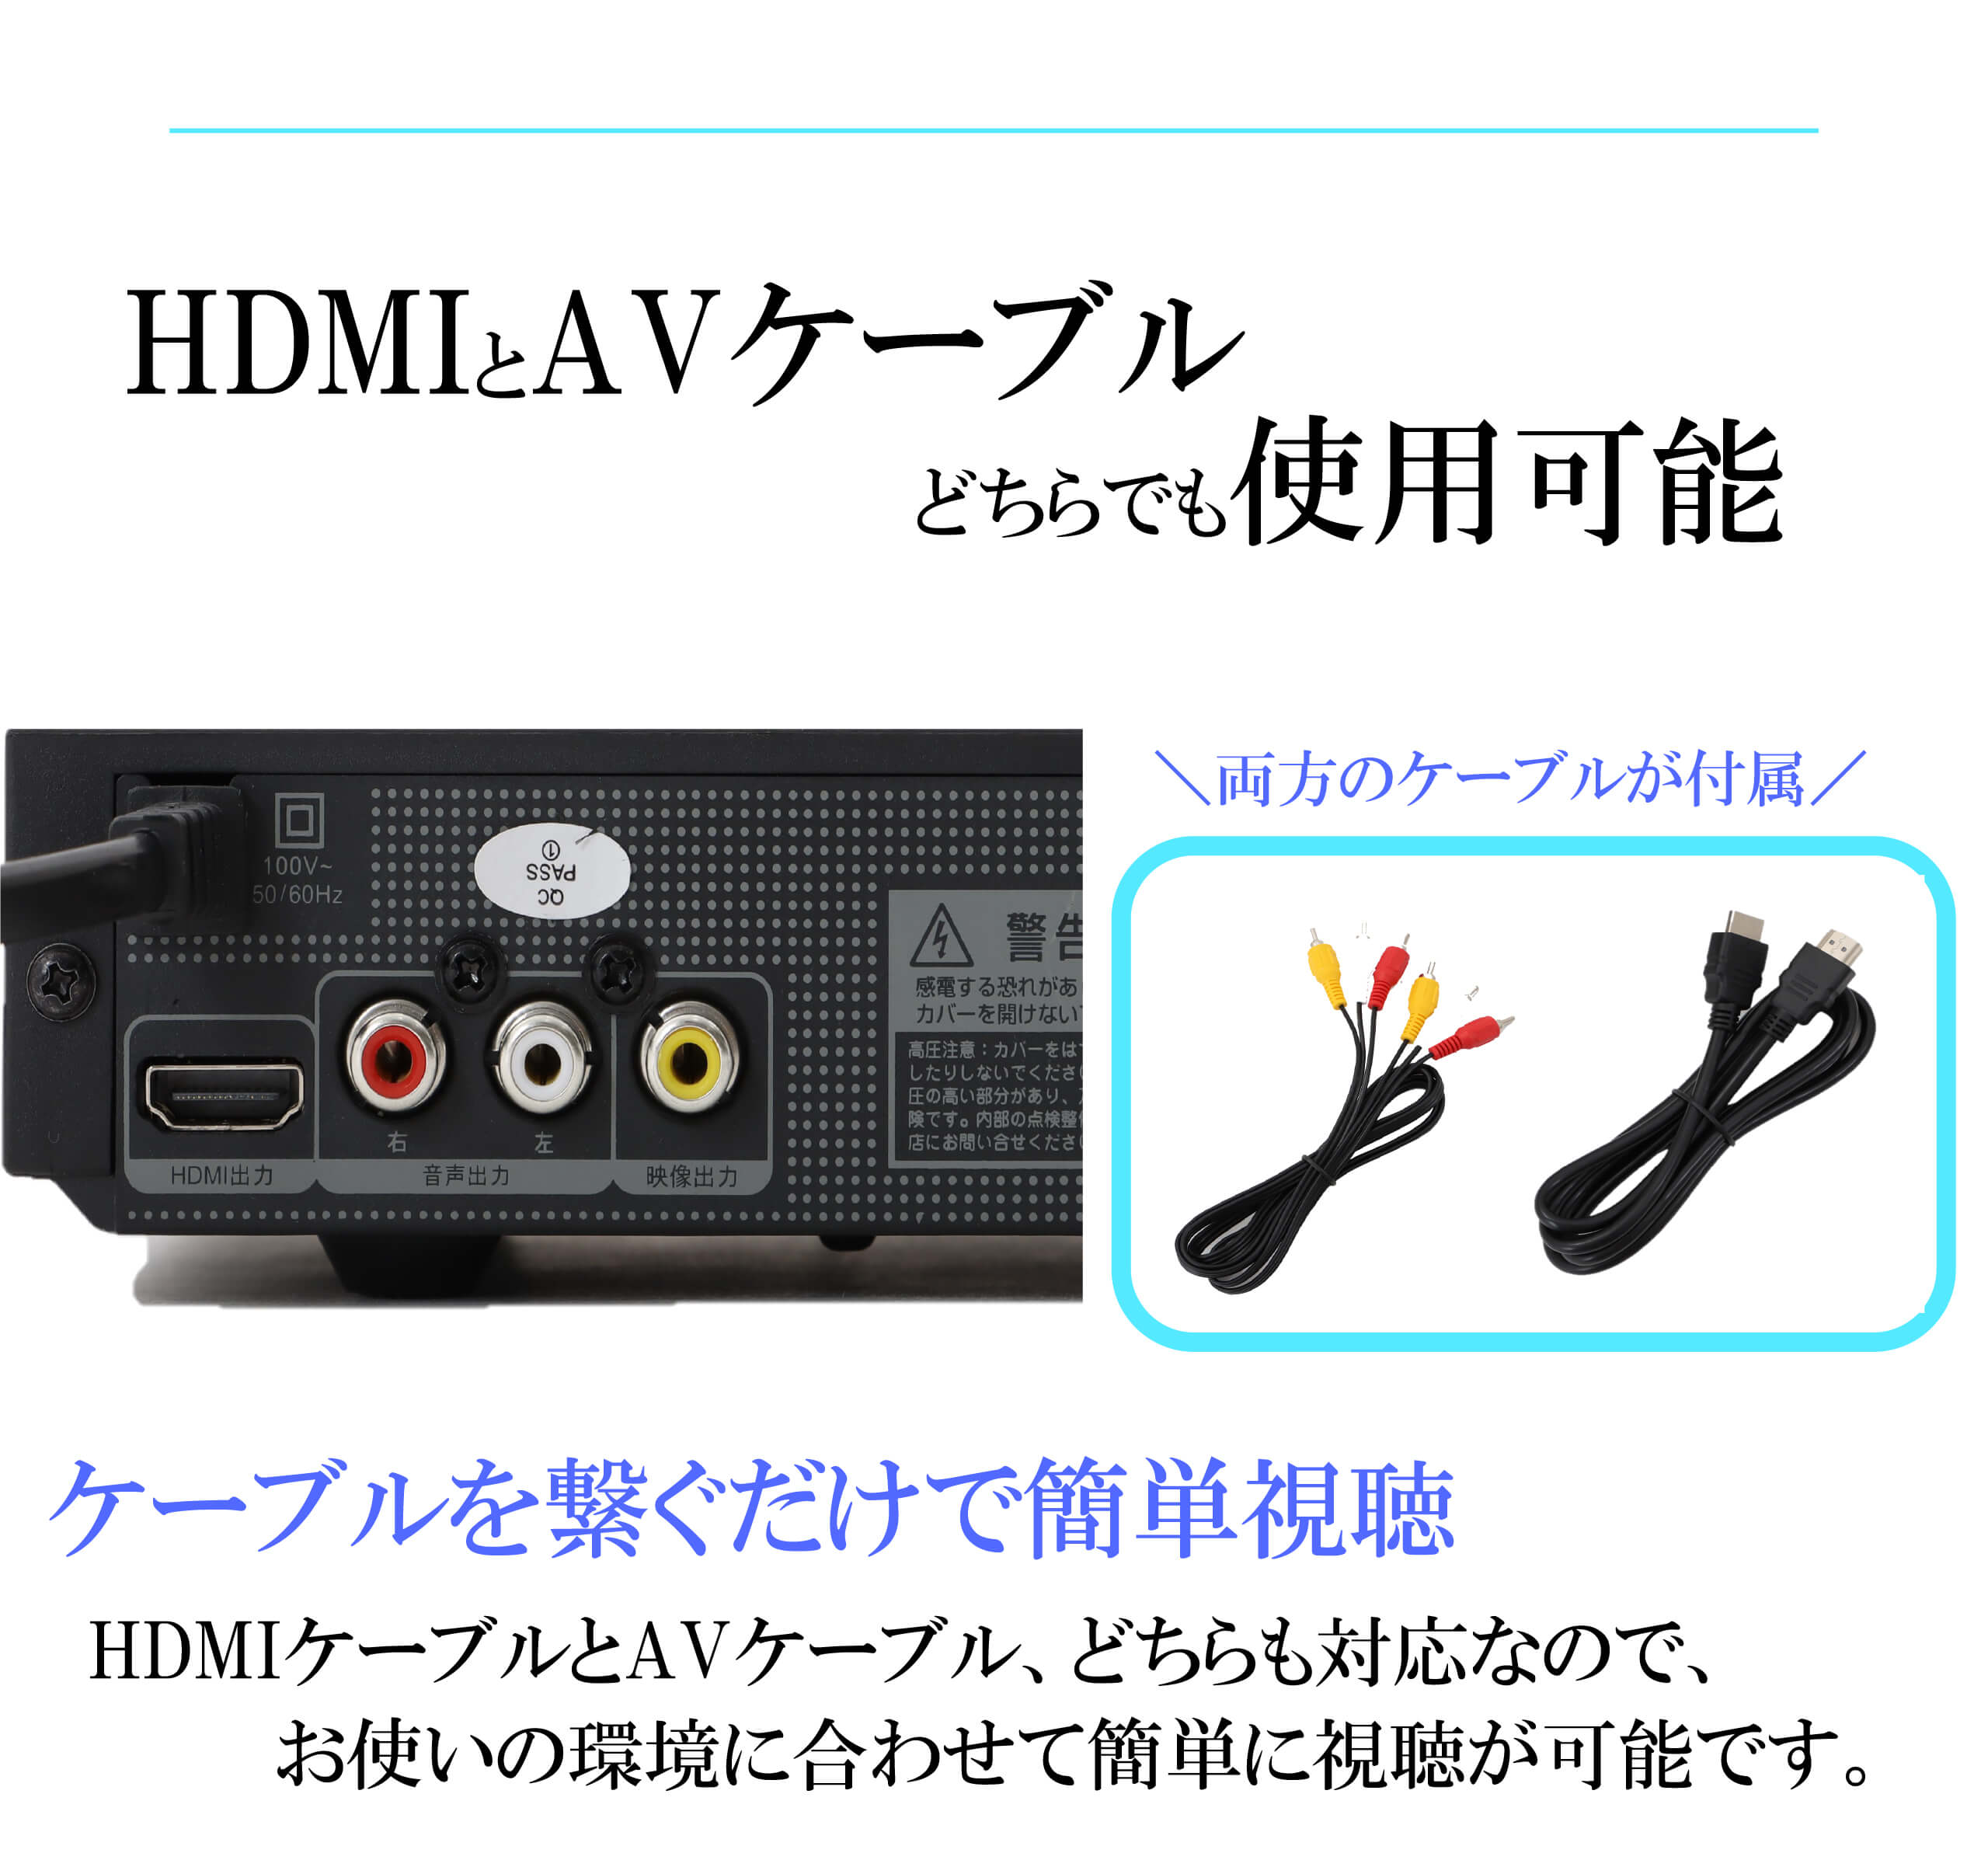 HDMI端子付き据置DVDプレーヤー TH-HDV02 : 製品一覧